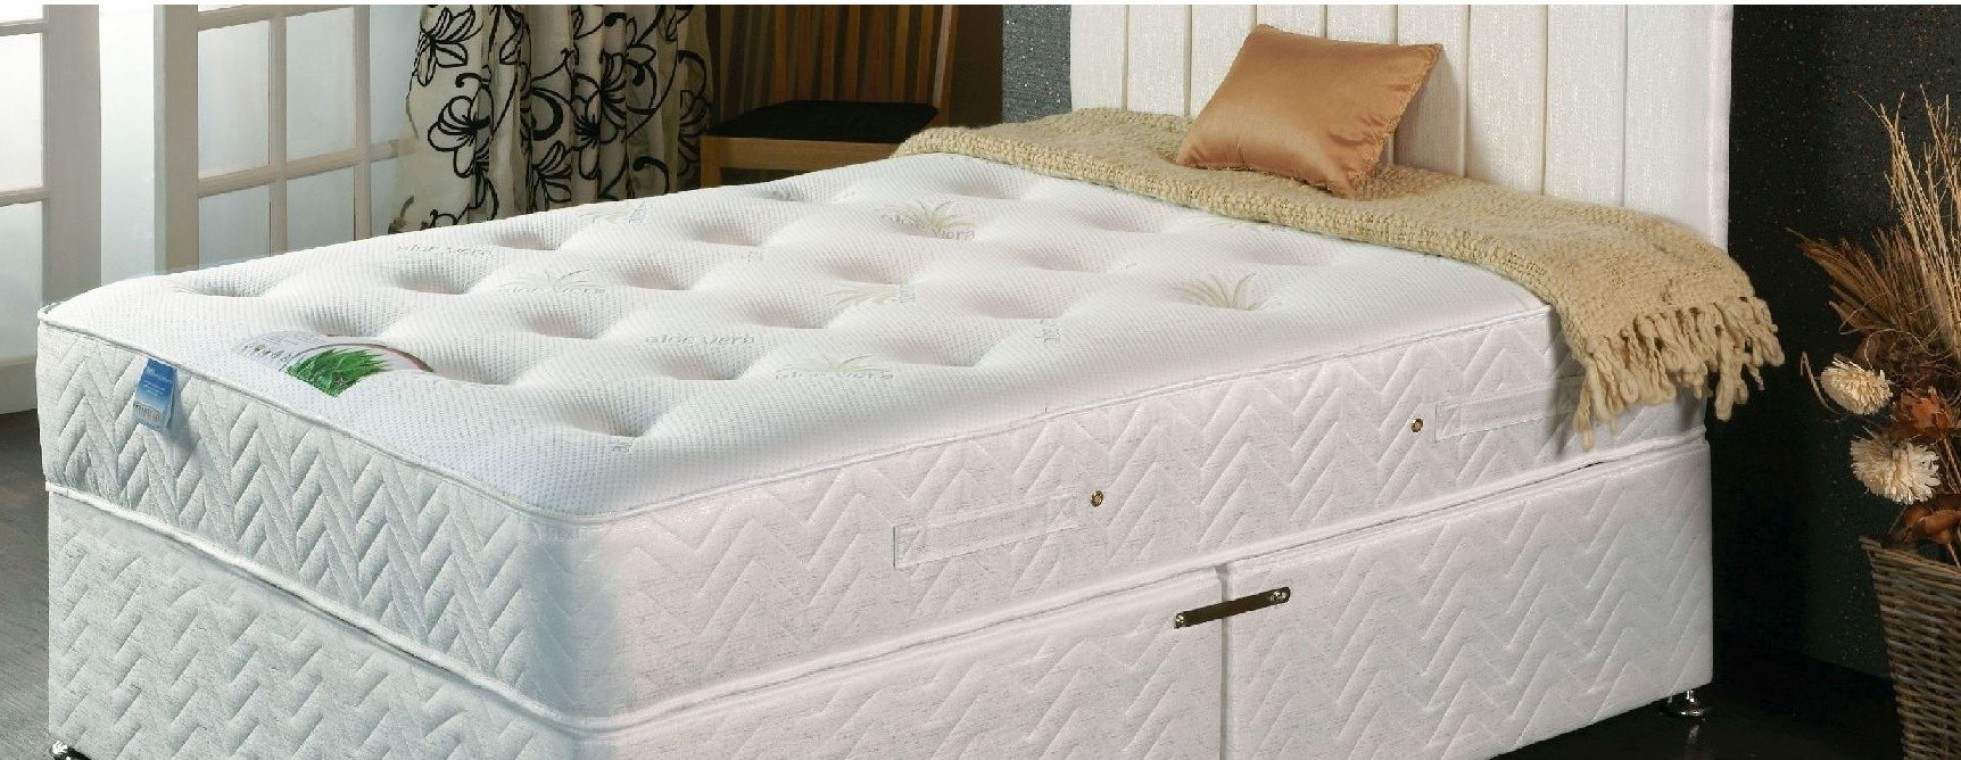 /_images/product-photos/tender-sleep-alovera-pocket-mattress-a.jpg